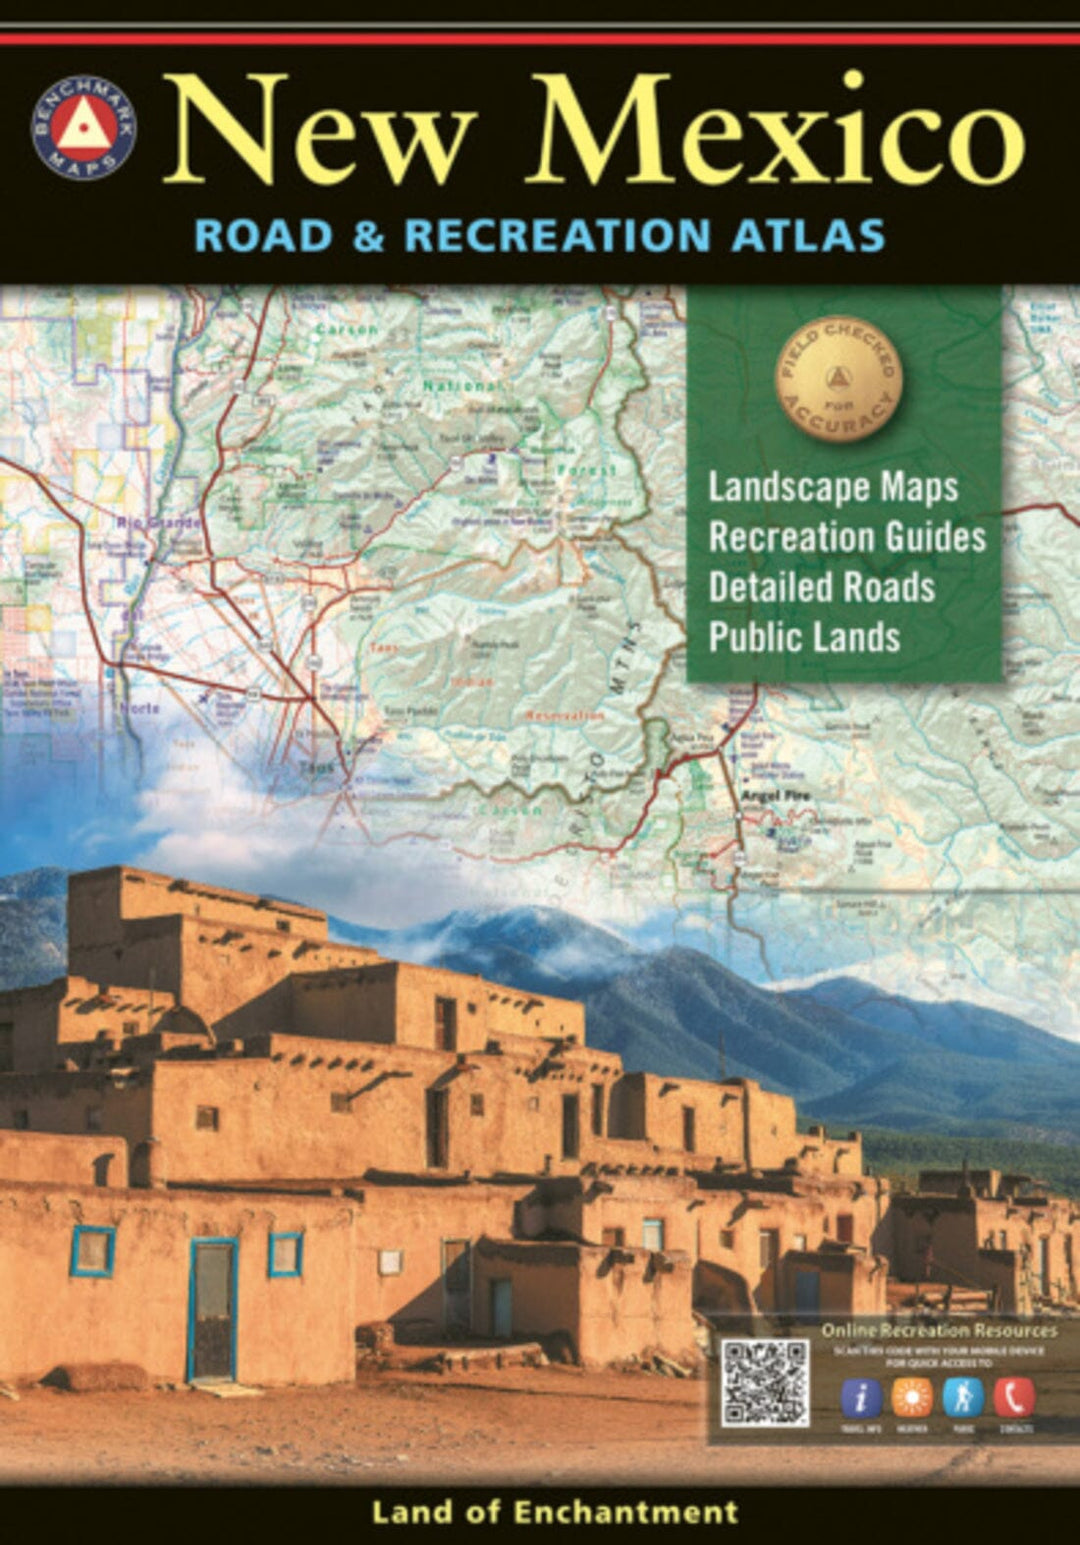 New Mexico : road & recreation atlas | Benchmark Maps atlas 